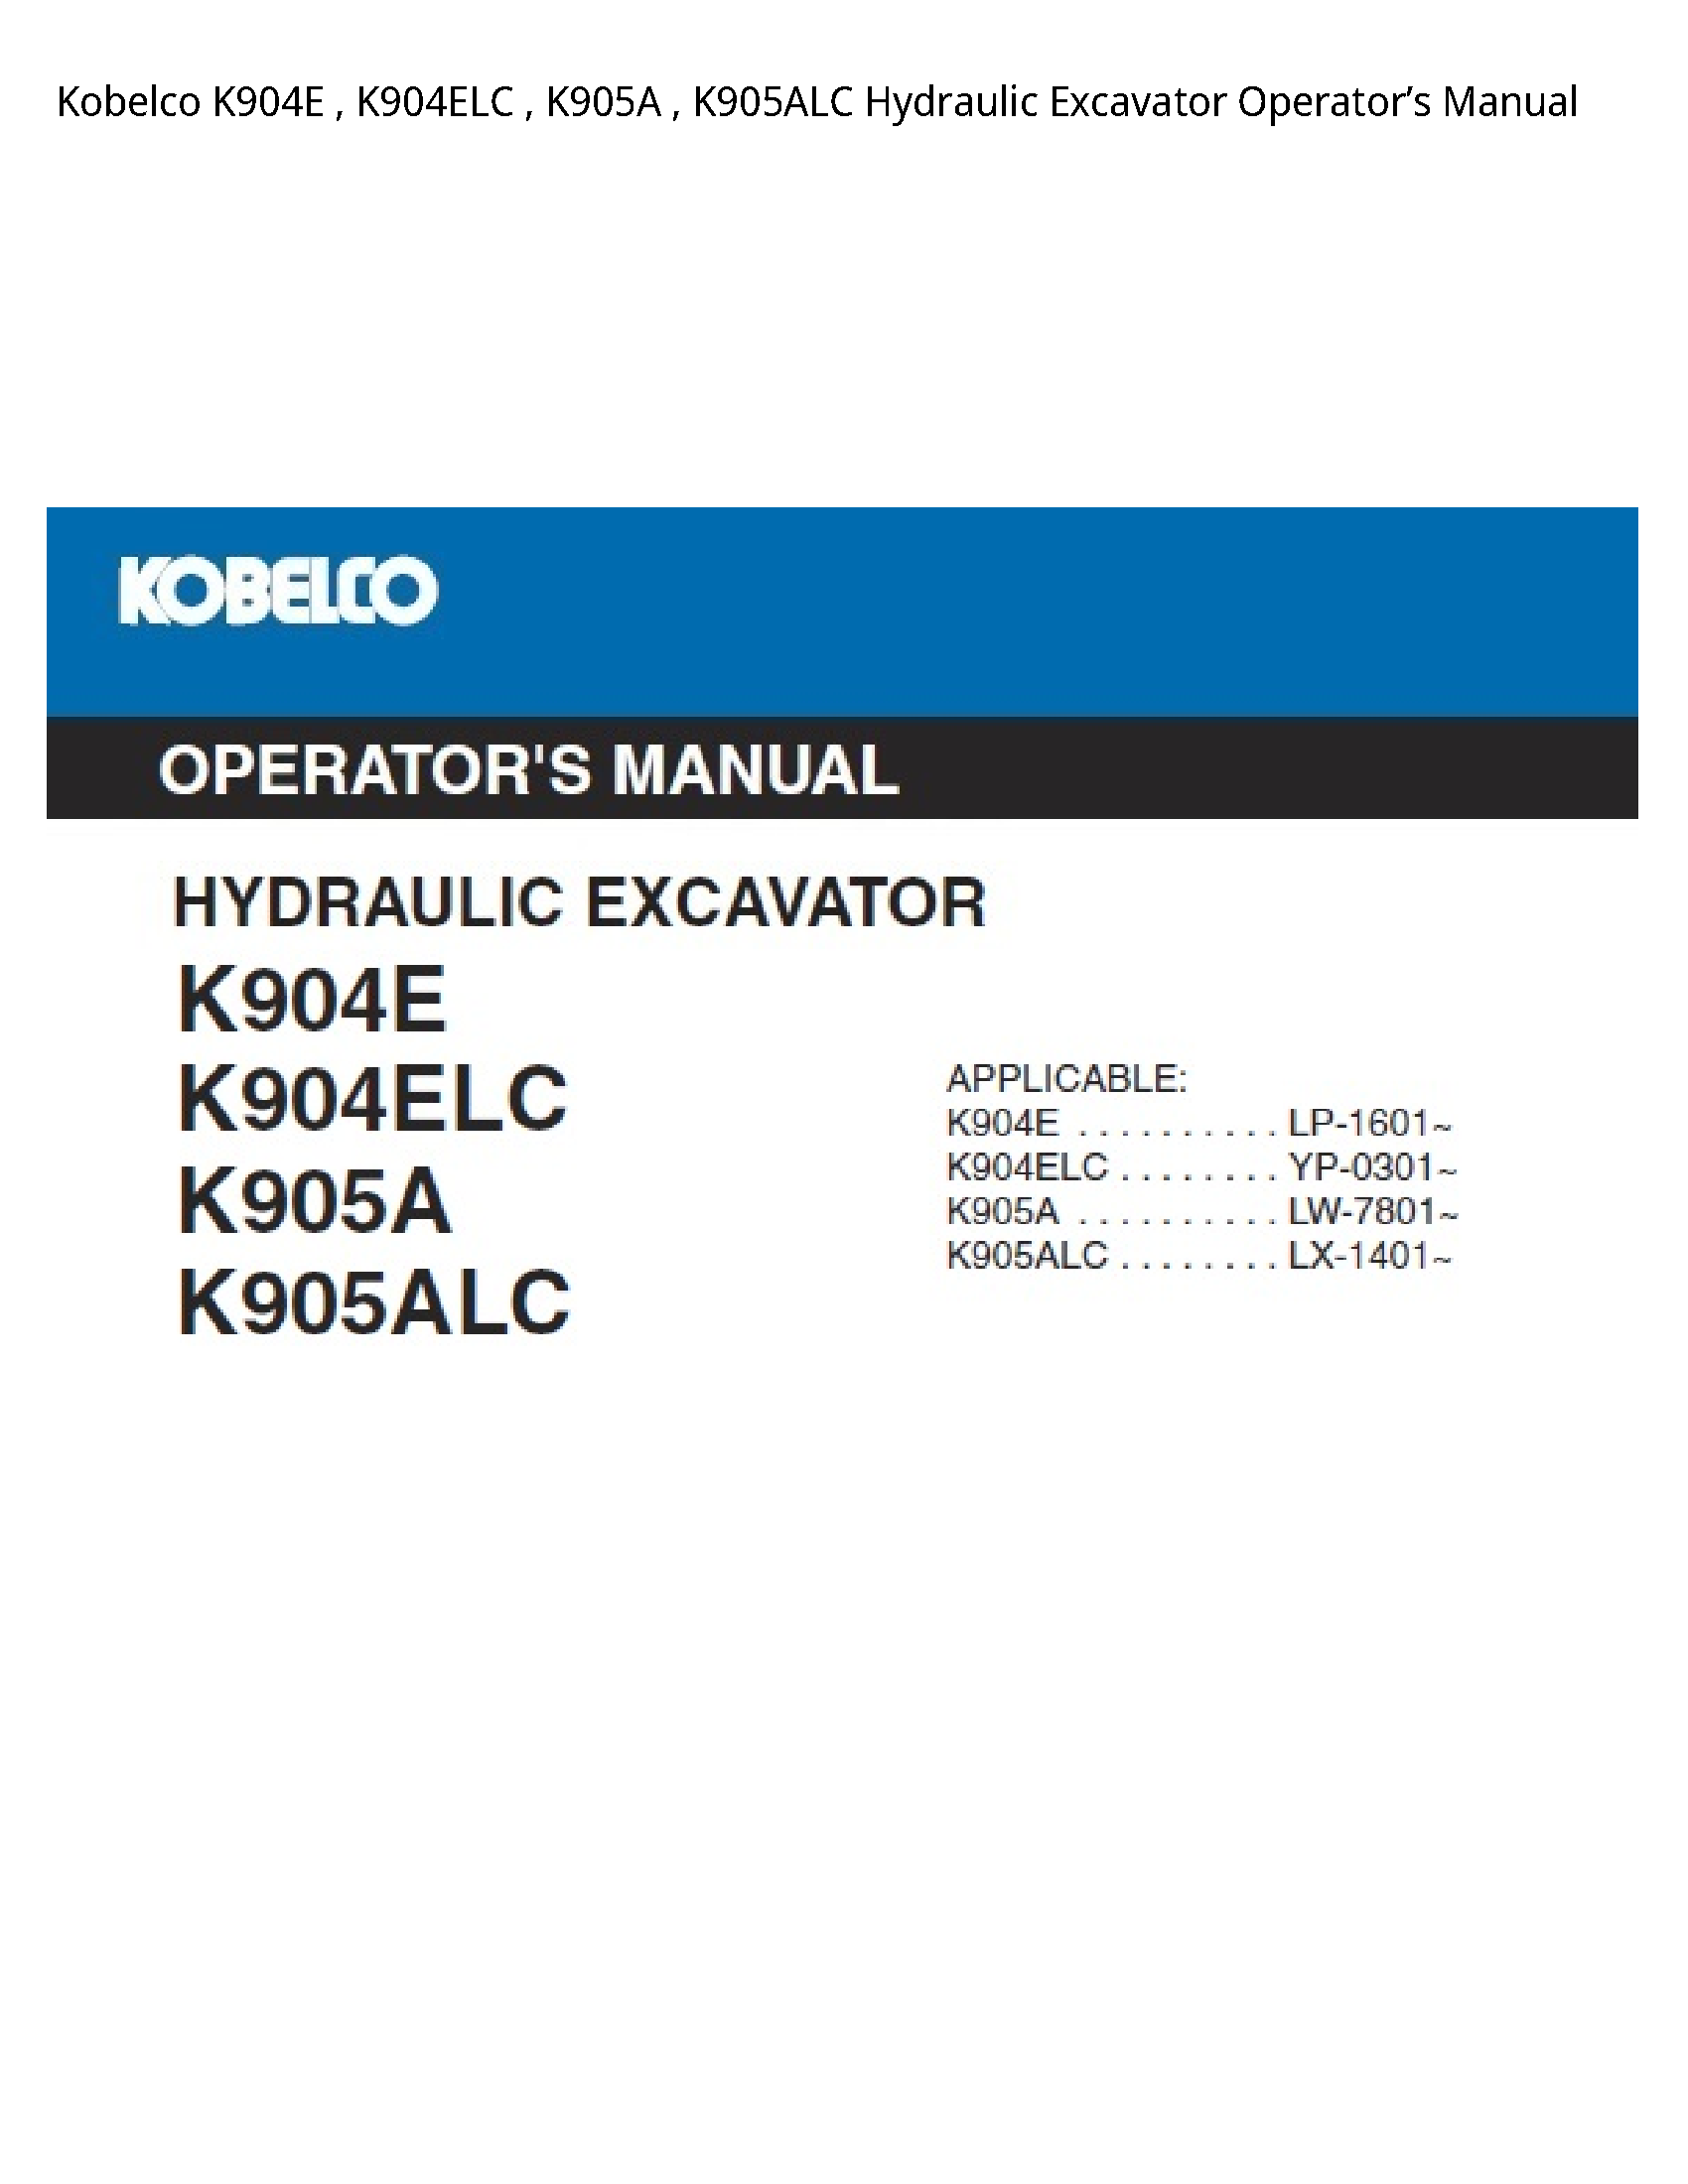 Kobelco K904E Hydraulic Excavator Operator’s manual